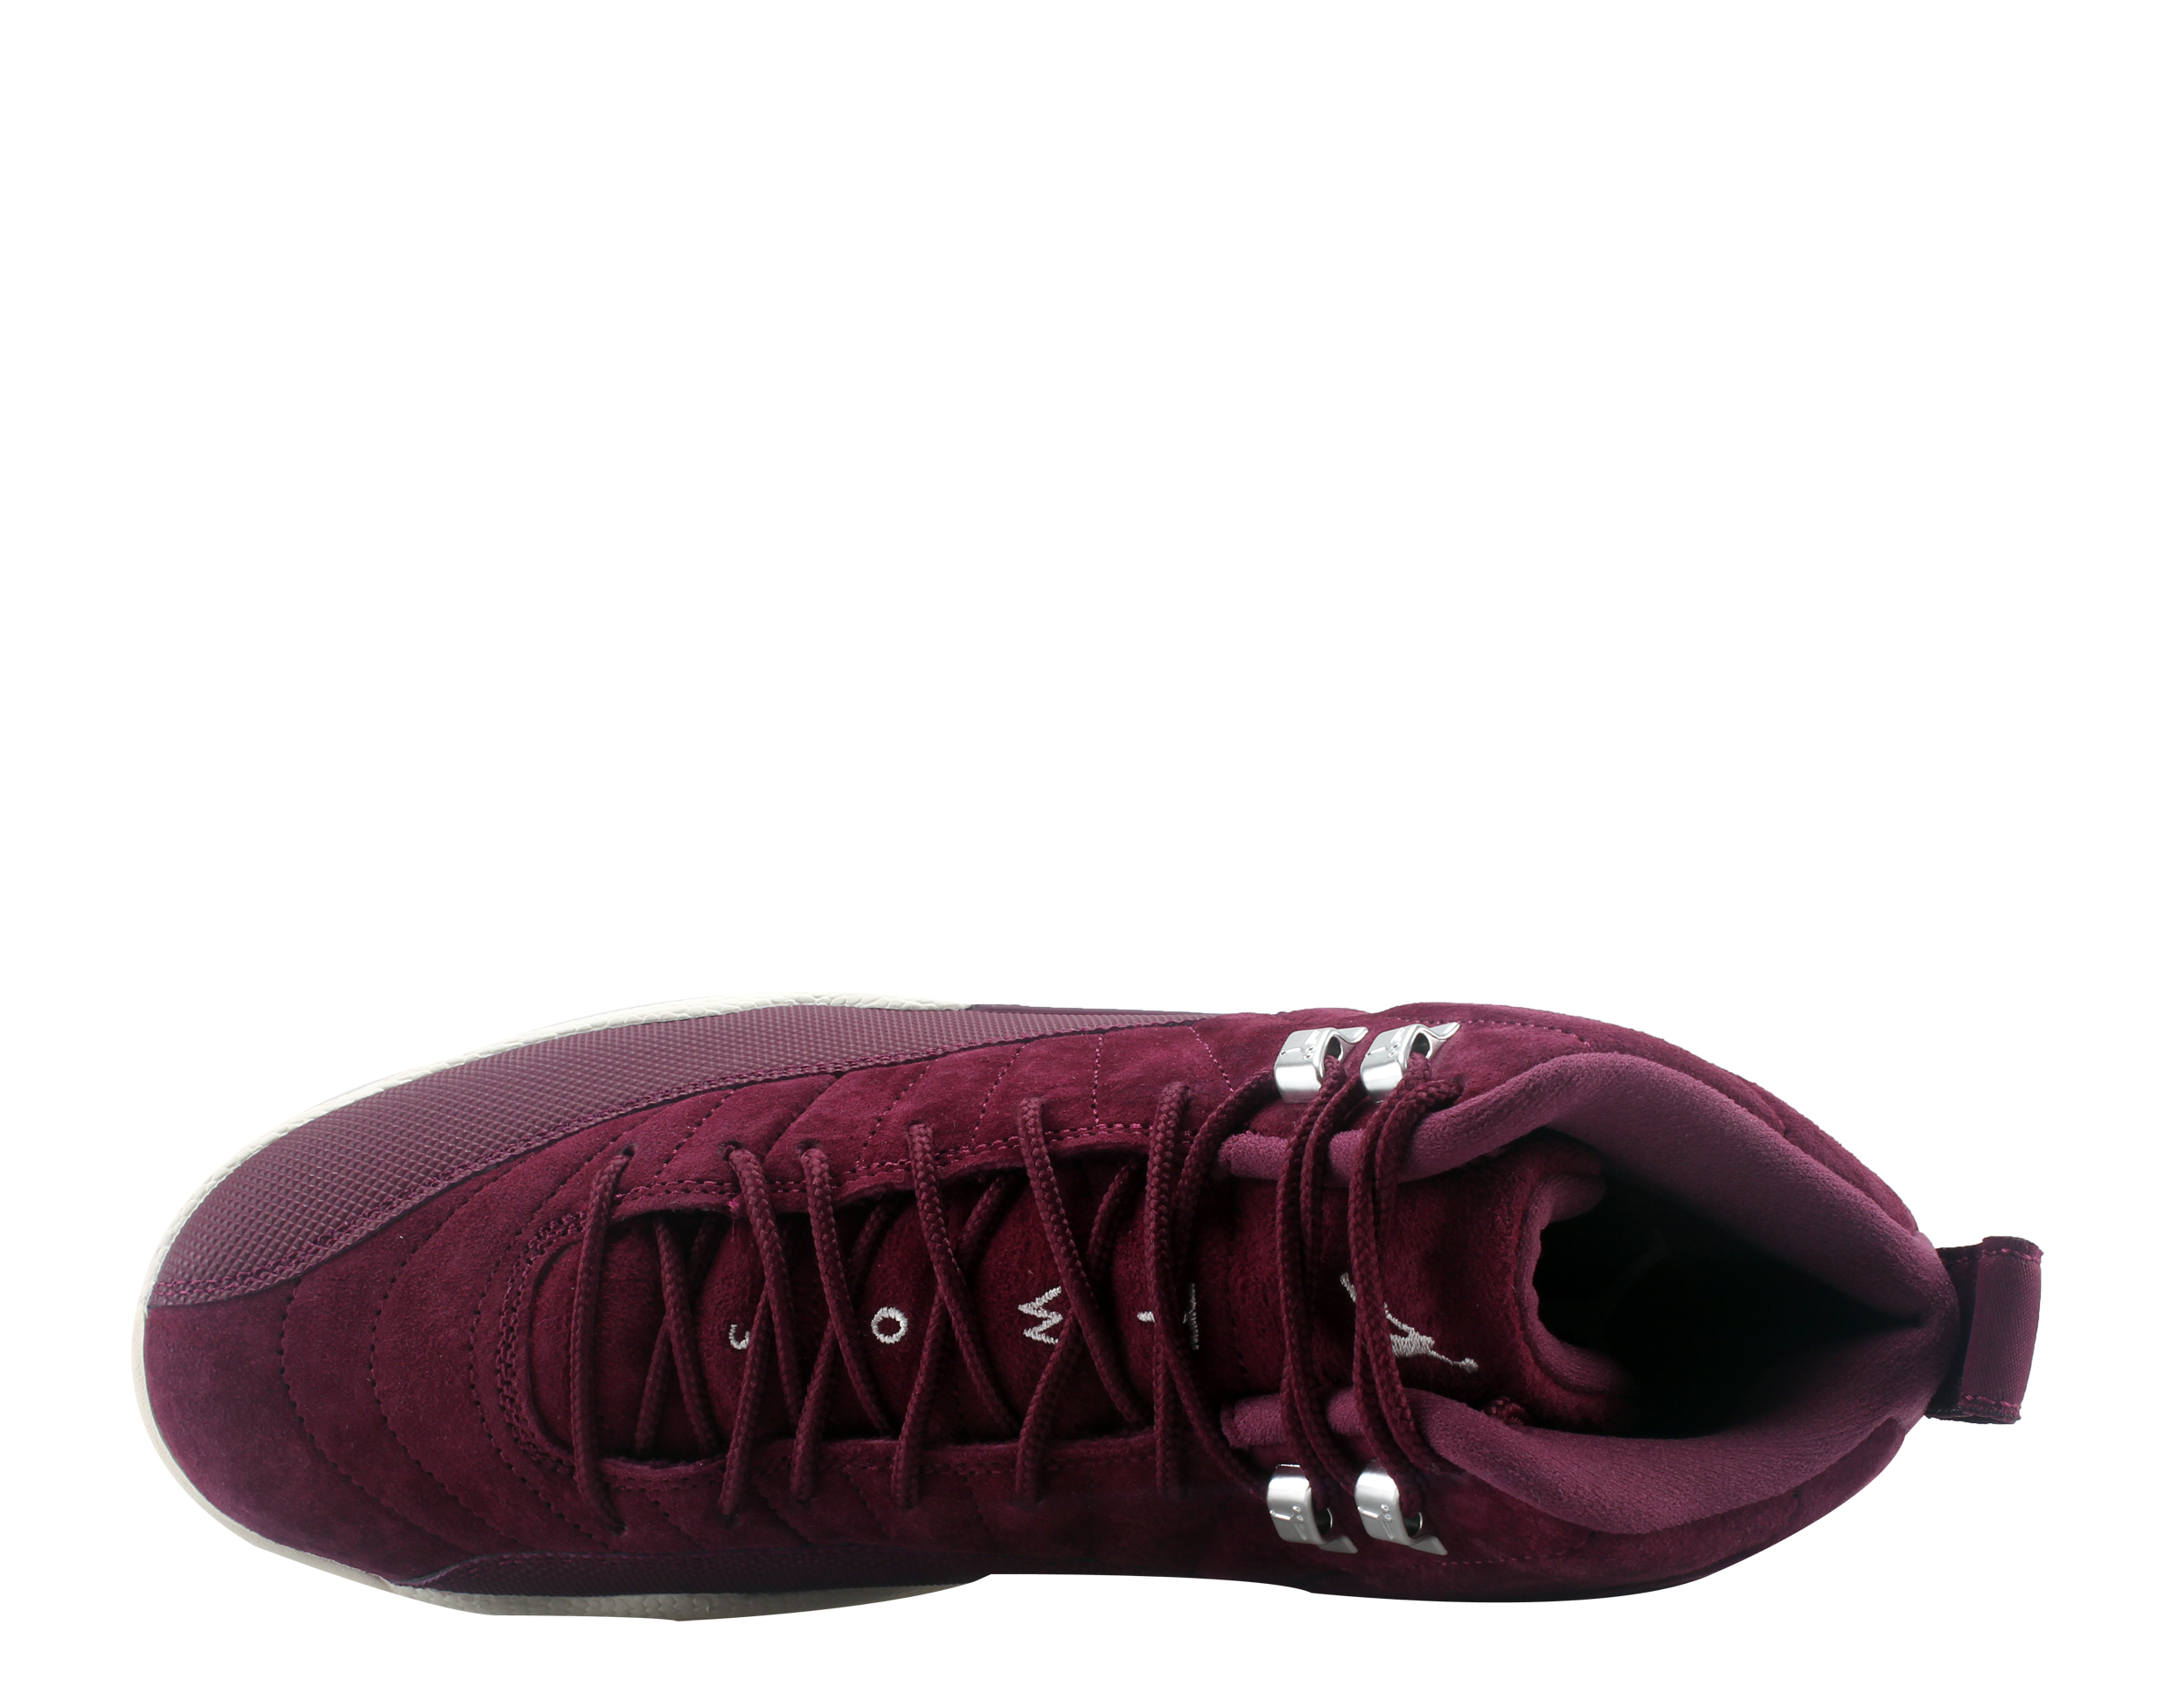 Nike Air Jordan 12 Retro Men's Basketball Shoes Size 9 - image 4 of 6